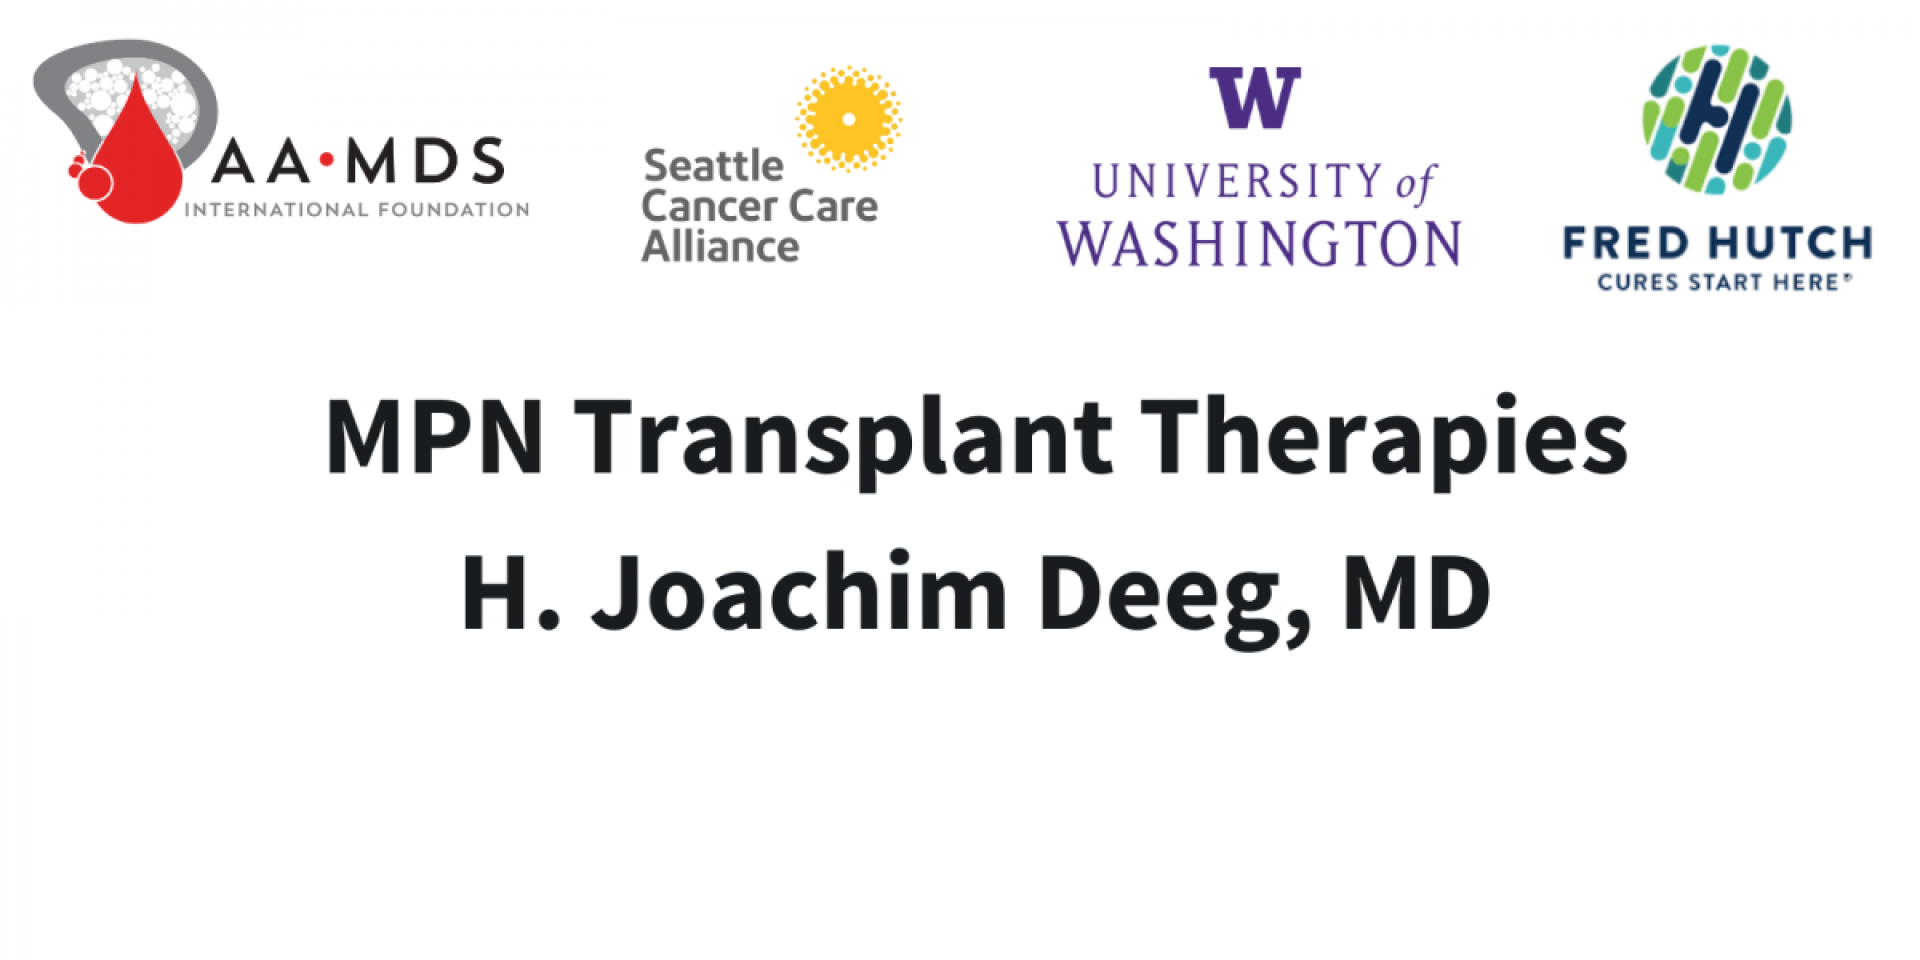 M-P-N transplant therapies